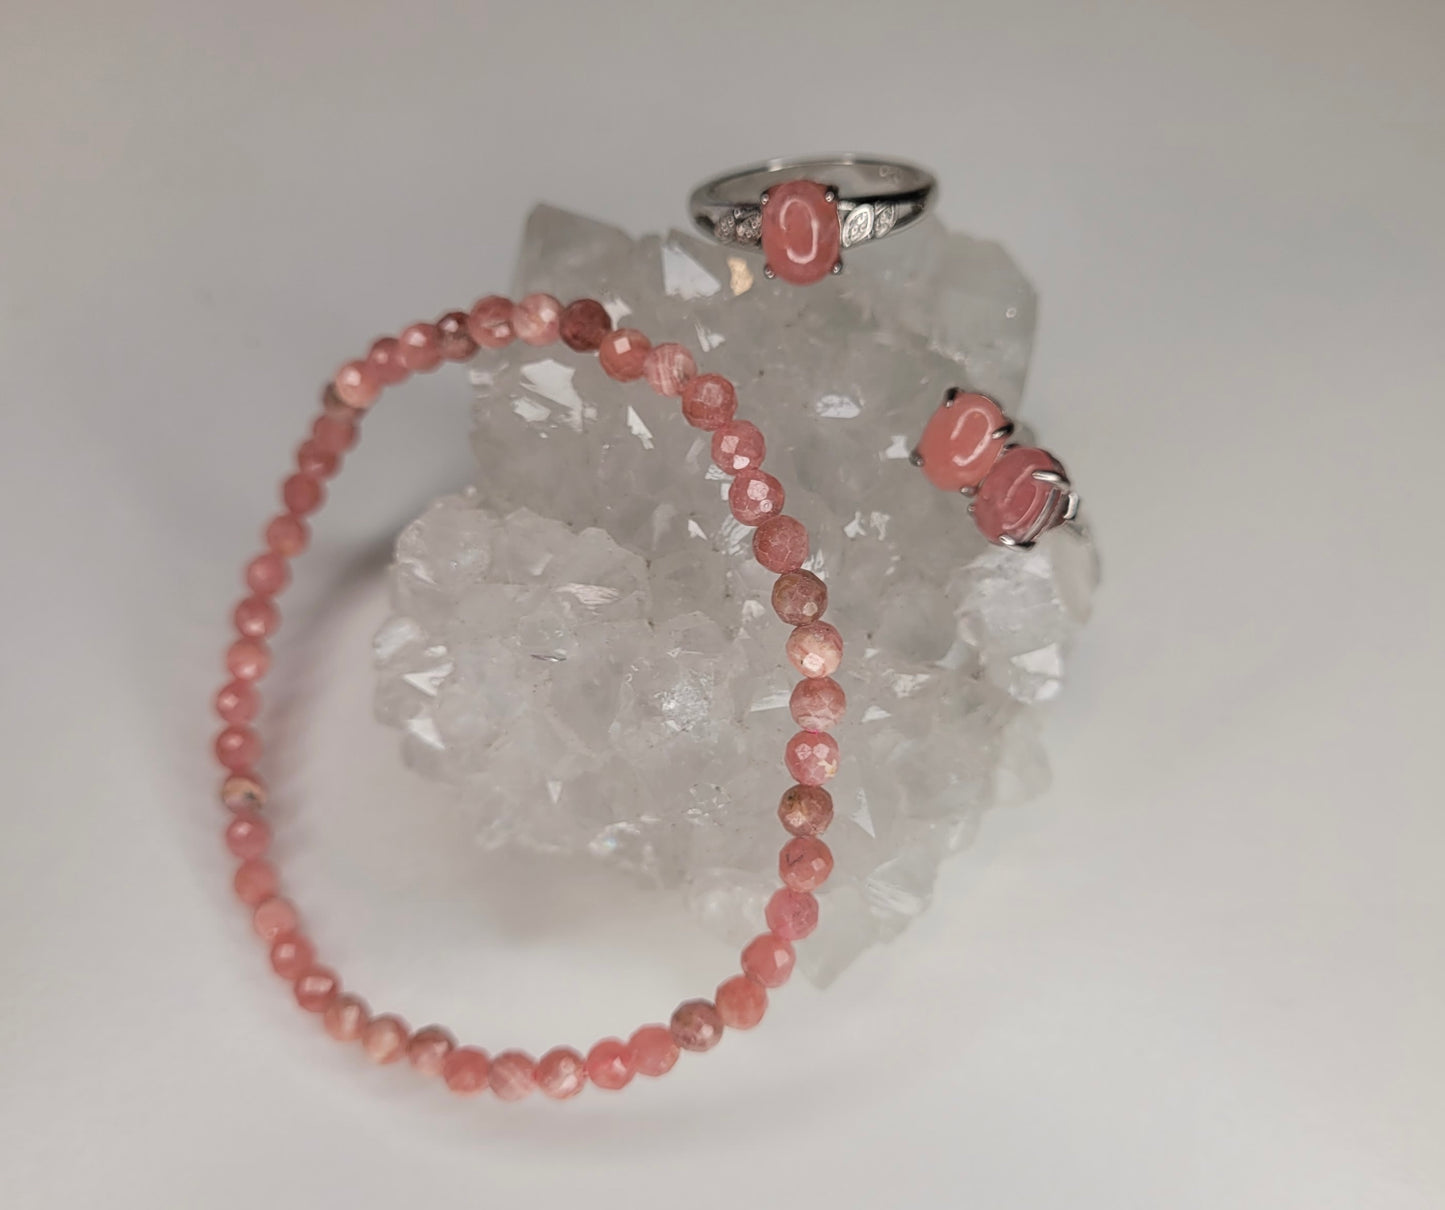 Rhodochrosite Crystal Bracelet